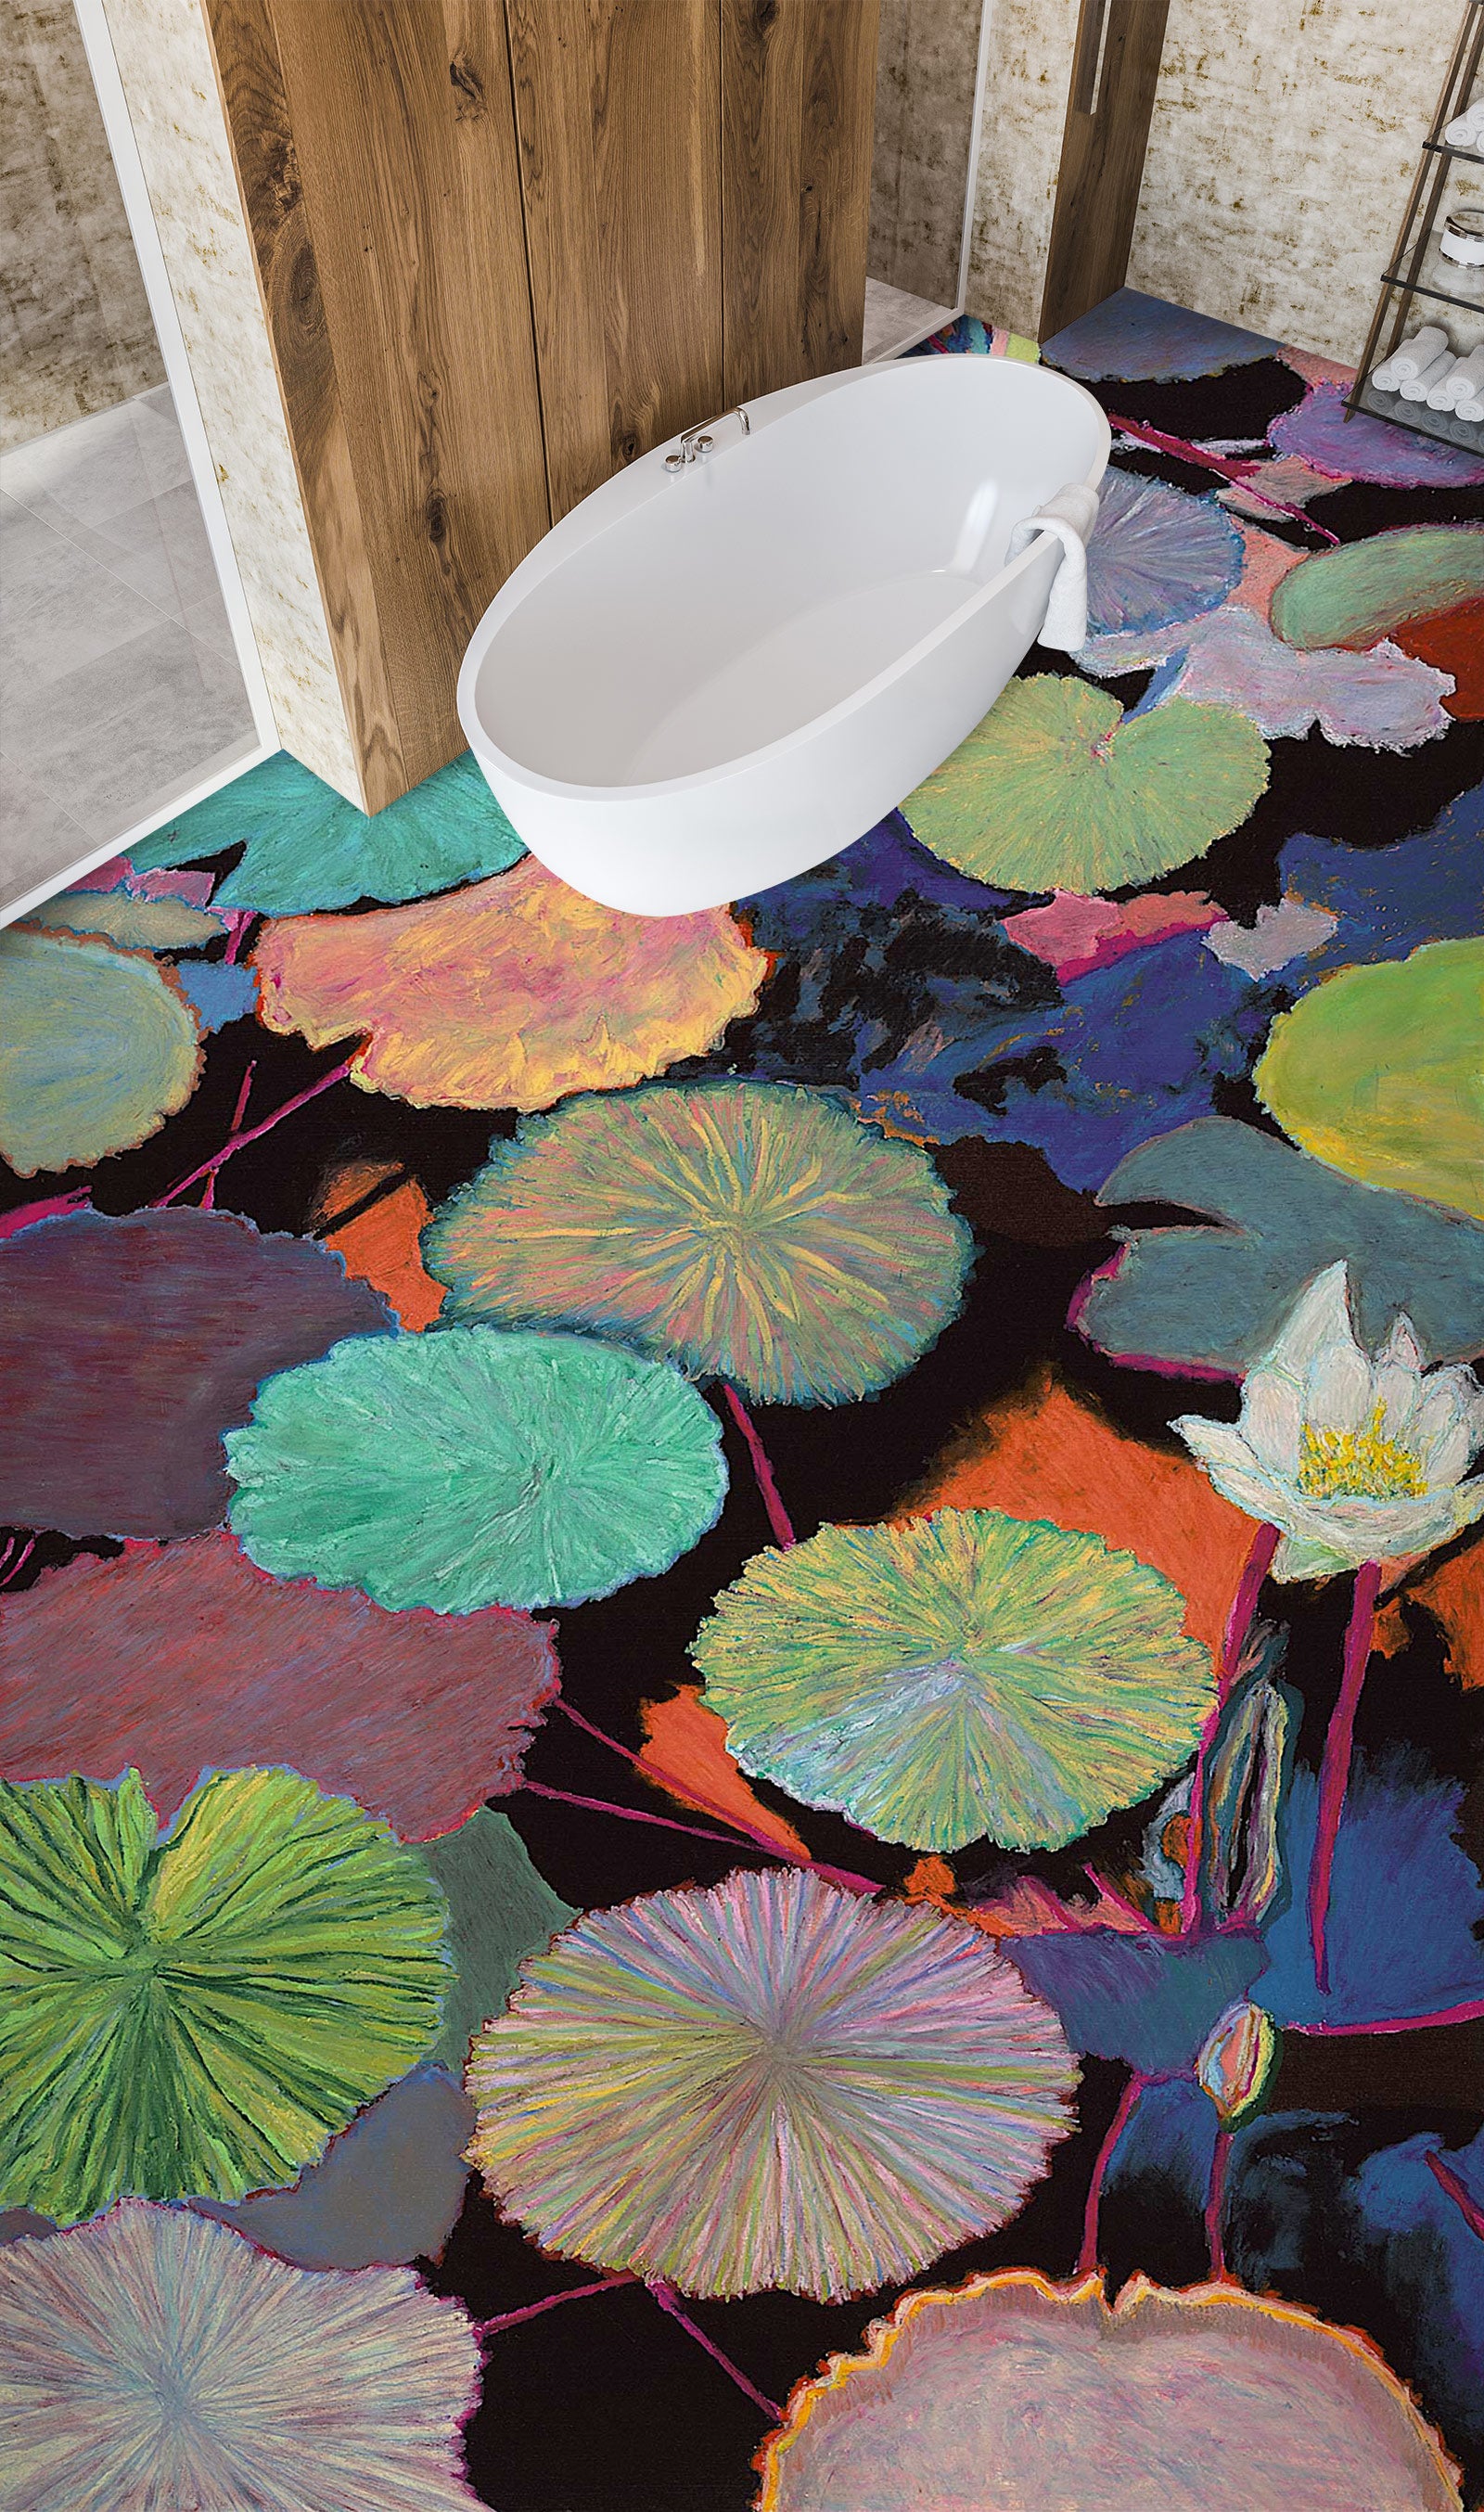 3D Colorful Lotus Leaf 96121 Allan P. Friedlander Floor Mural  Wallpaper Murals Self-Adhesive Removable Print Epoxy